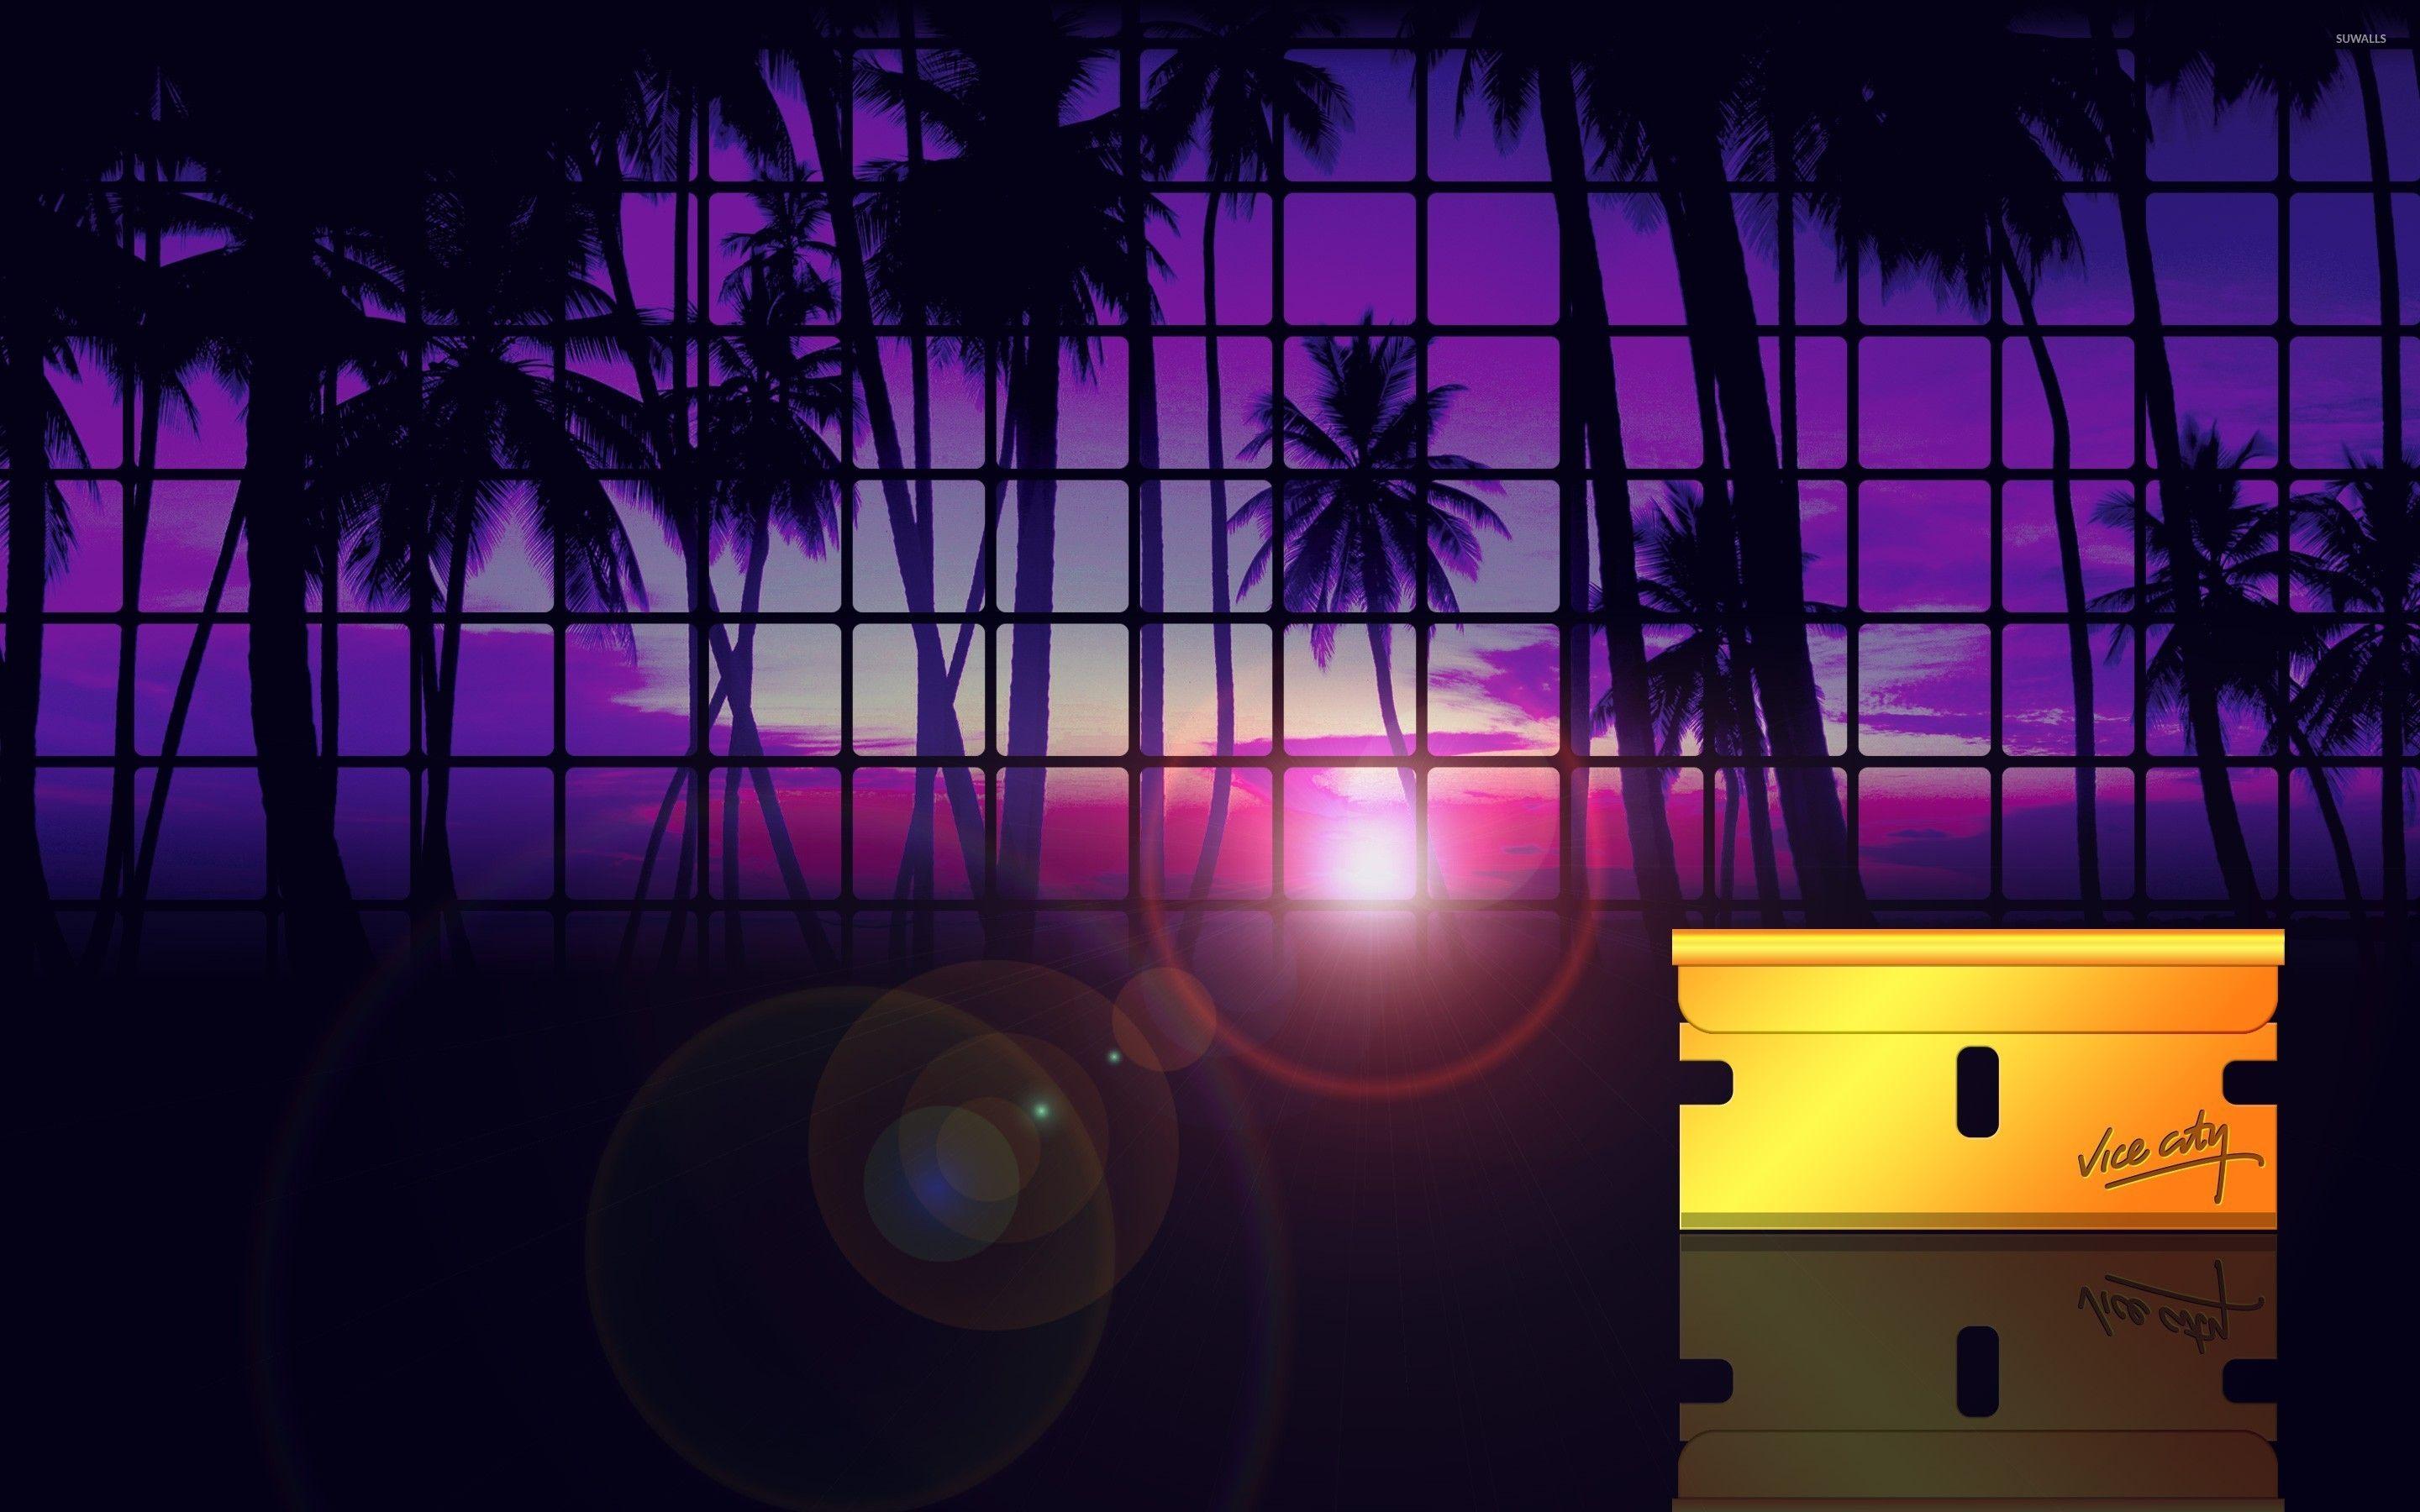 Grand Theft Auto: Vice City sunset wallpaper wallpaper